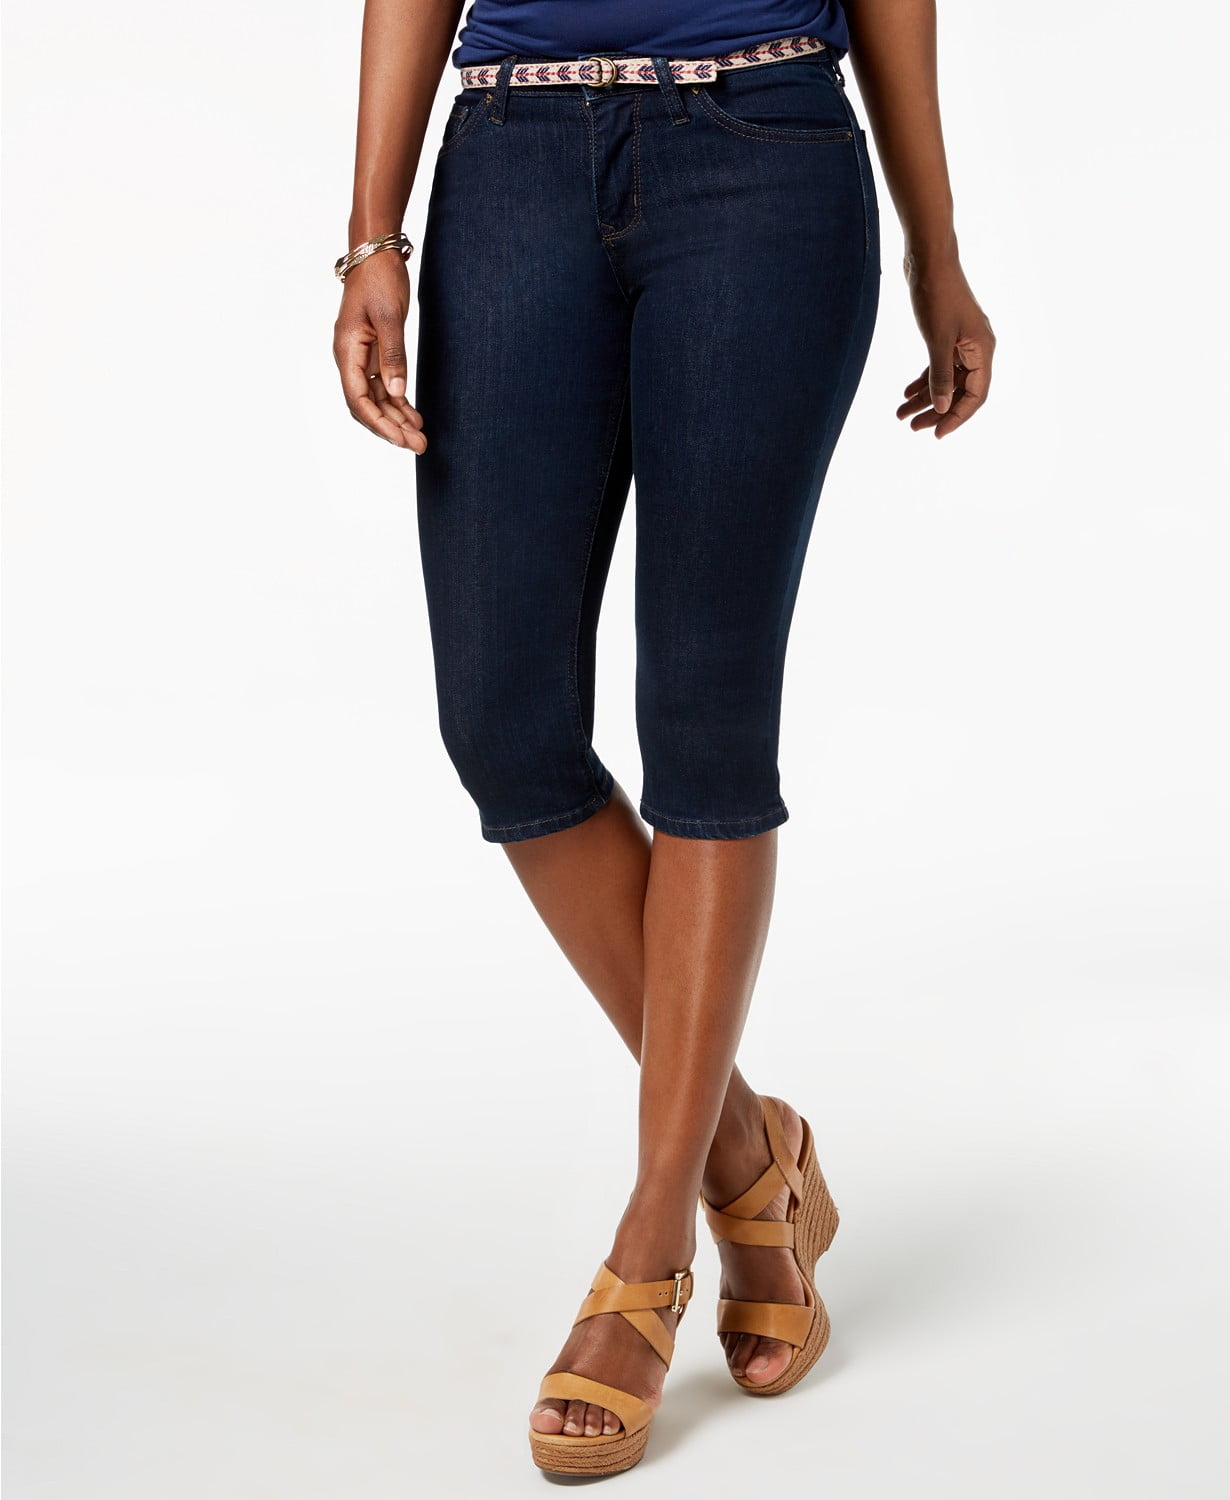 Lee Platinum - Stretch Denim Capri Jeans - Petite - 16 P - Walmart.com